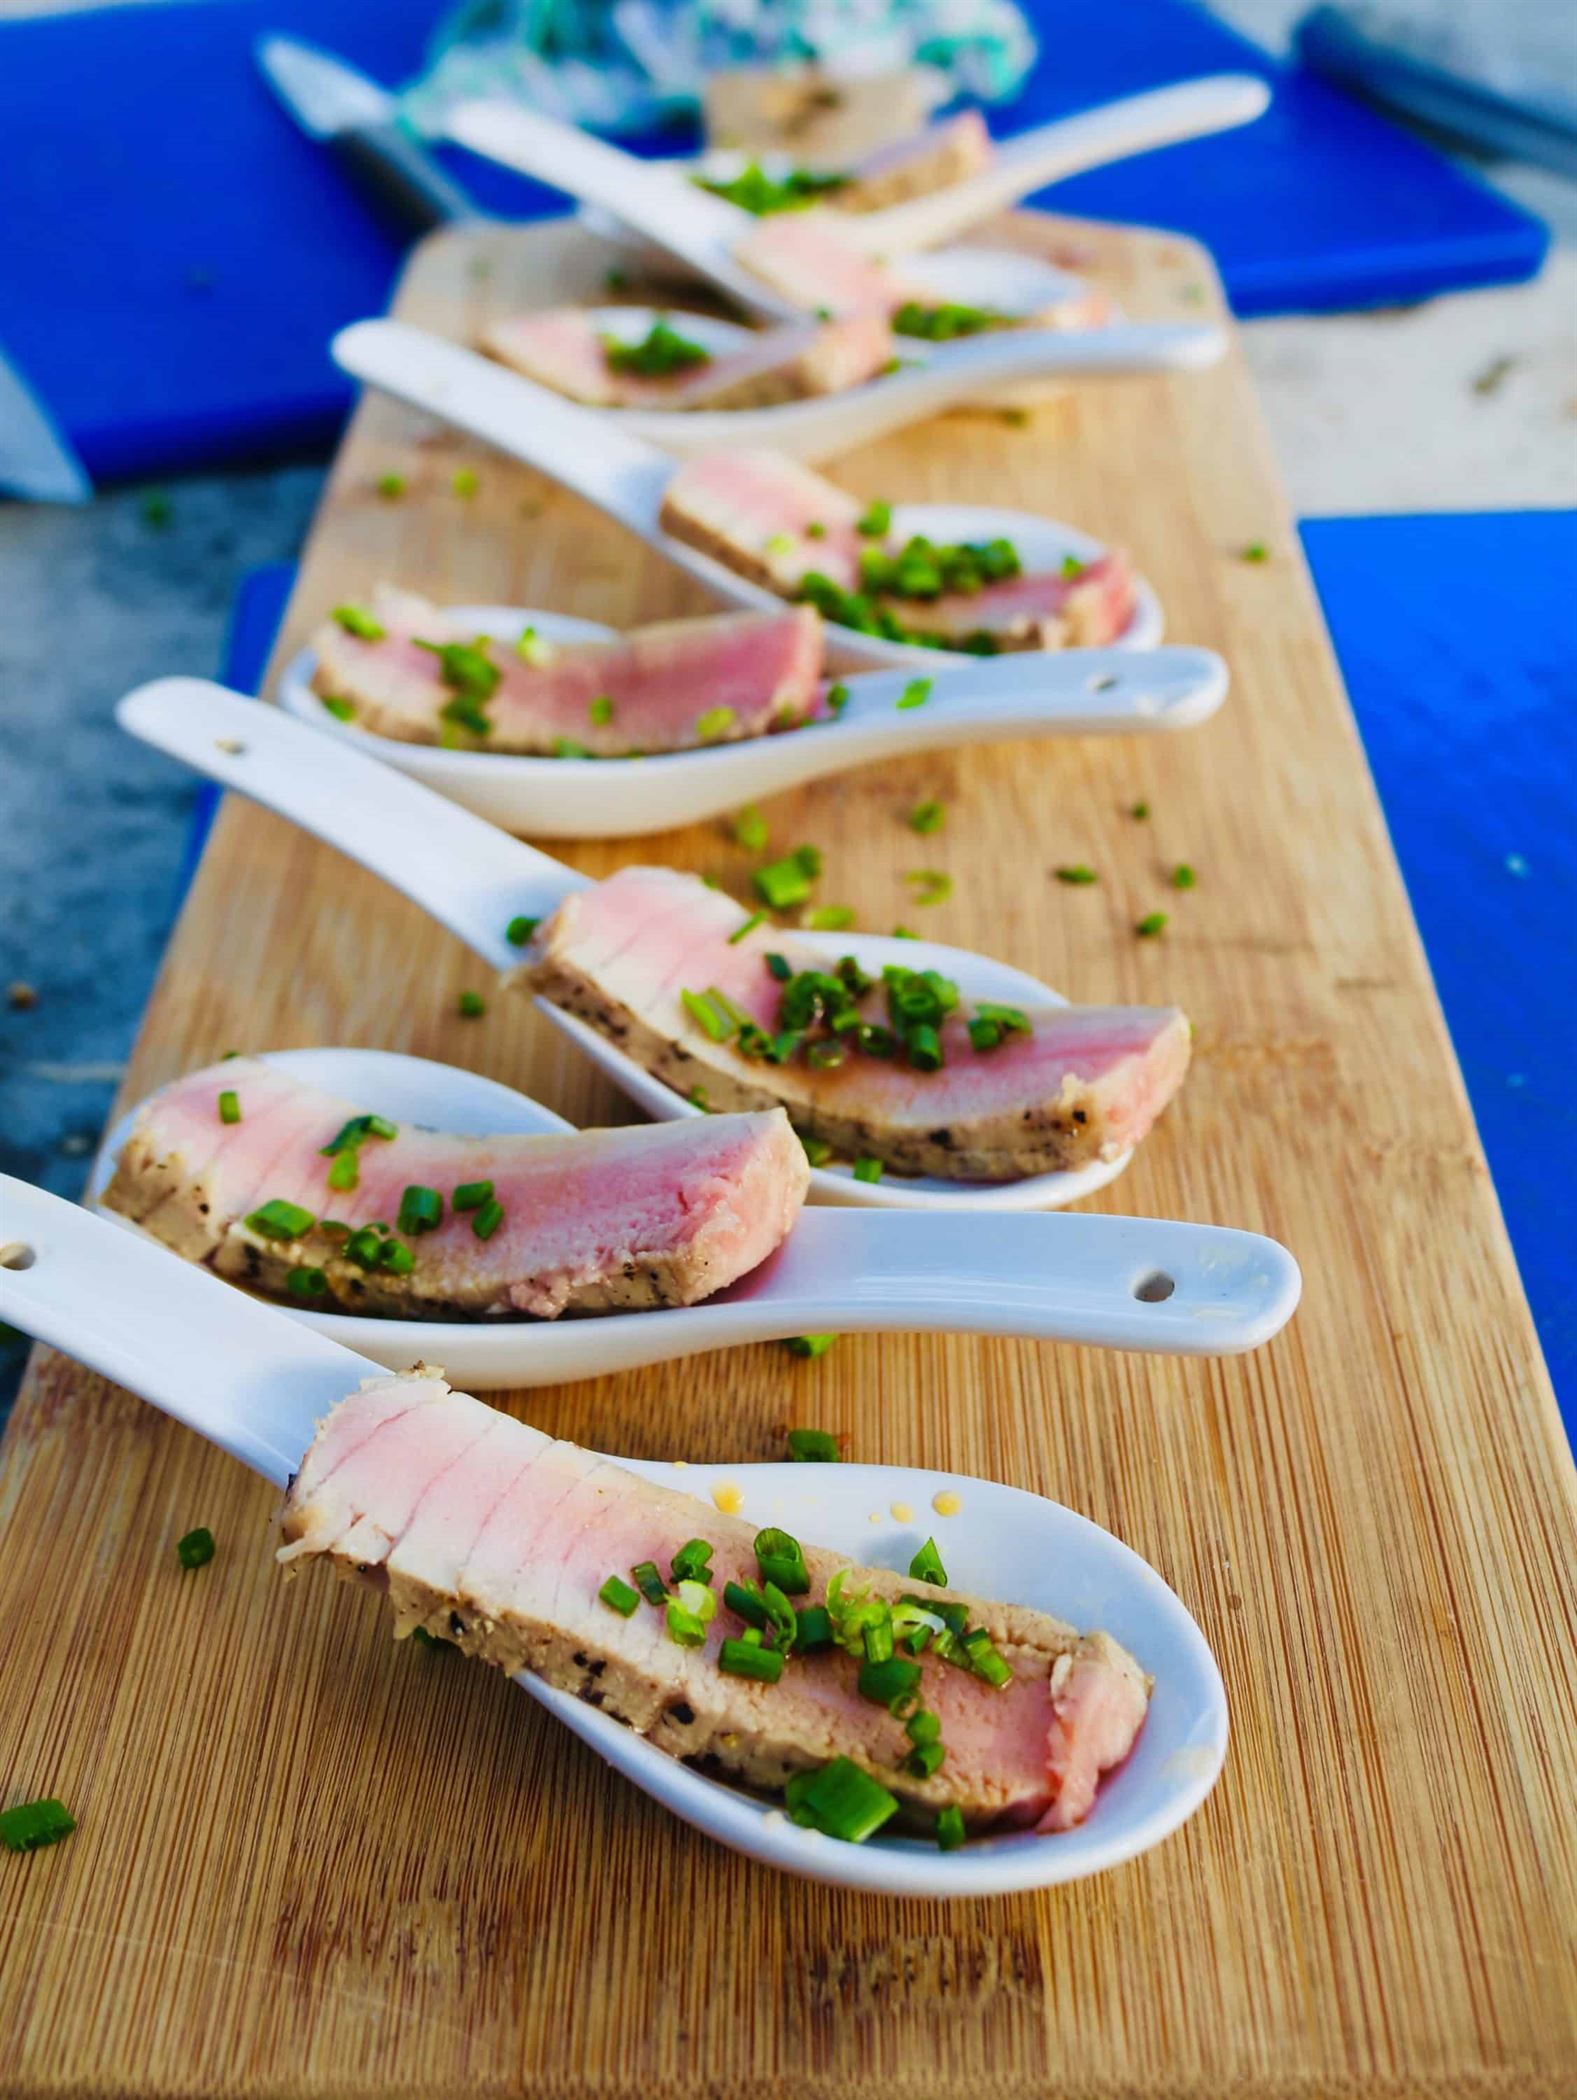 Amazing Tuna Tataki Is Life a Recipe?